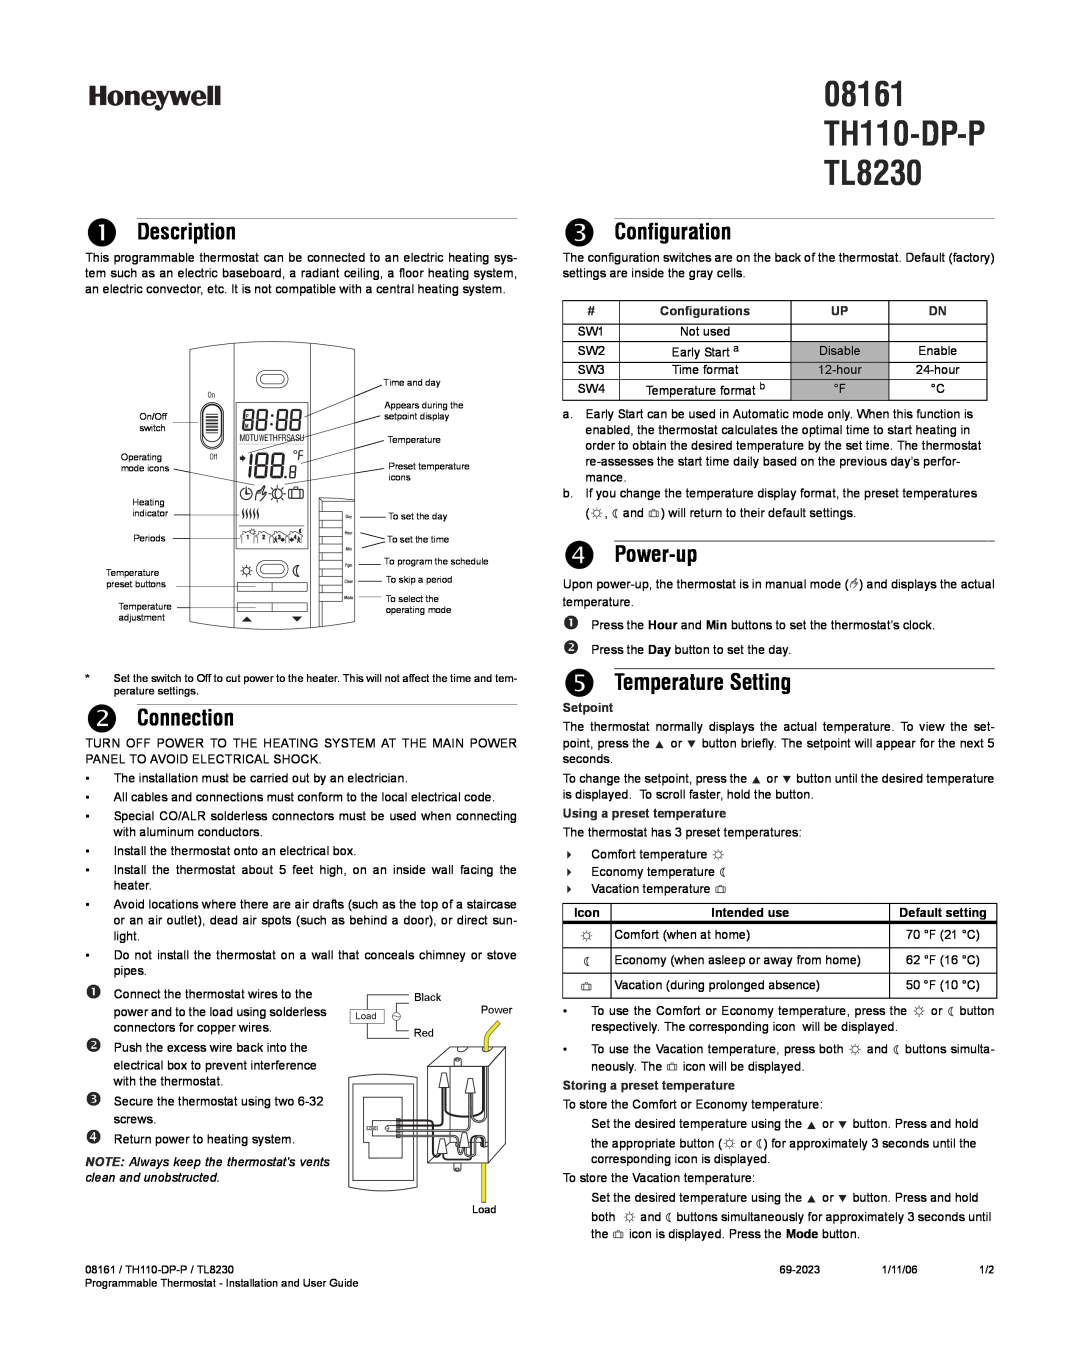 Honeywell TH110-DP-P manual n Description, o Connection, p Configuration, q Power-up, r Temperature Setting, Setpoint 